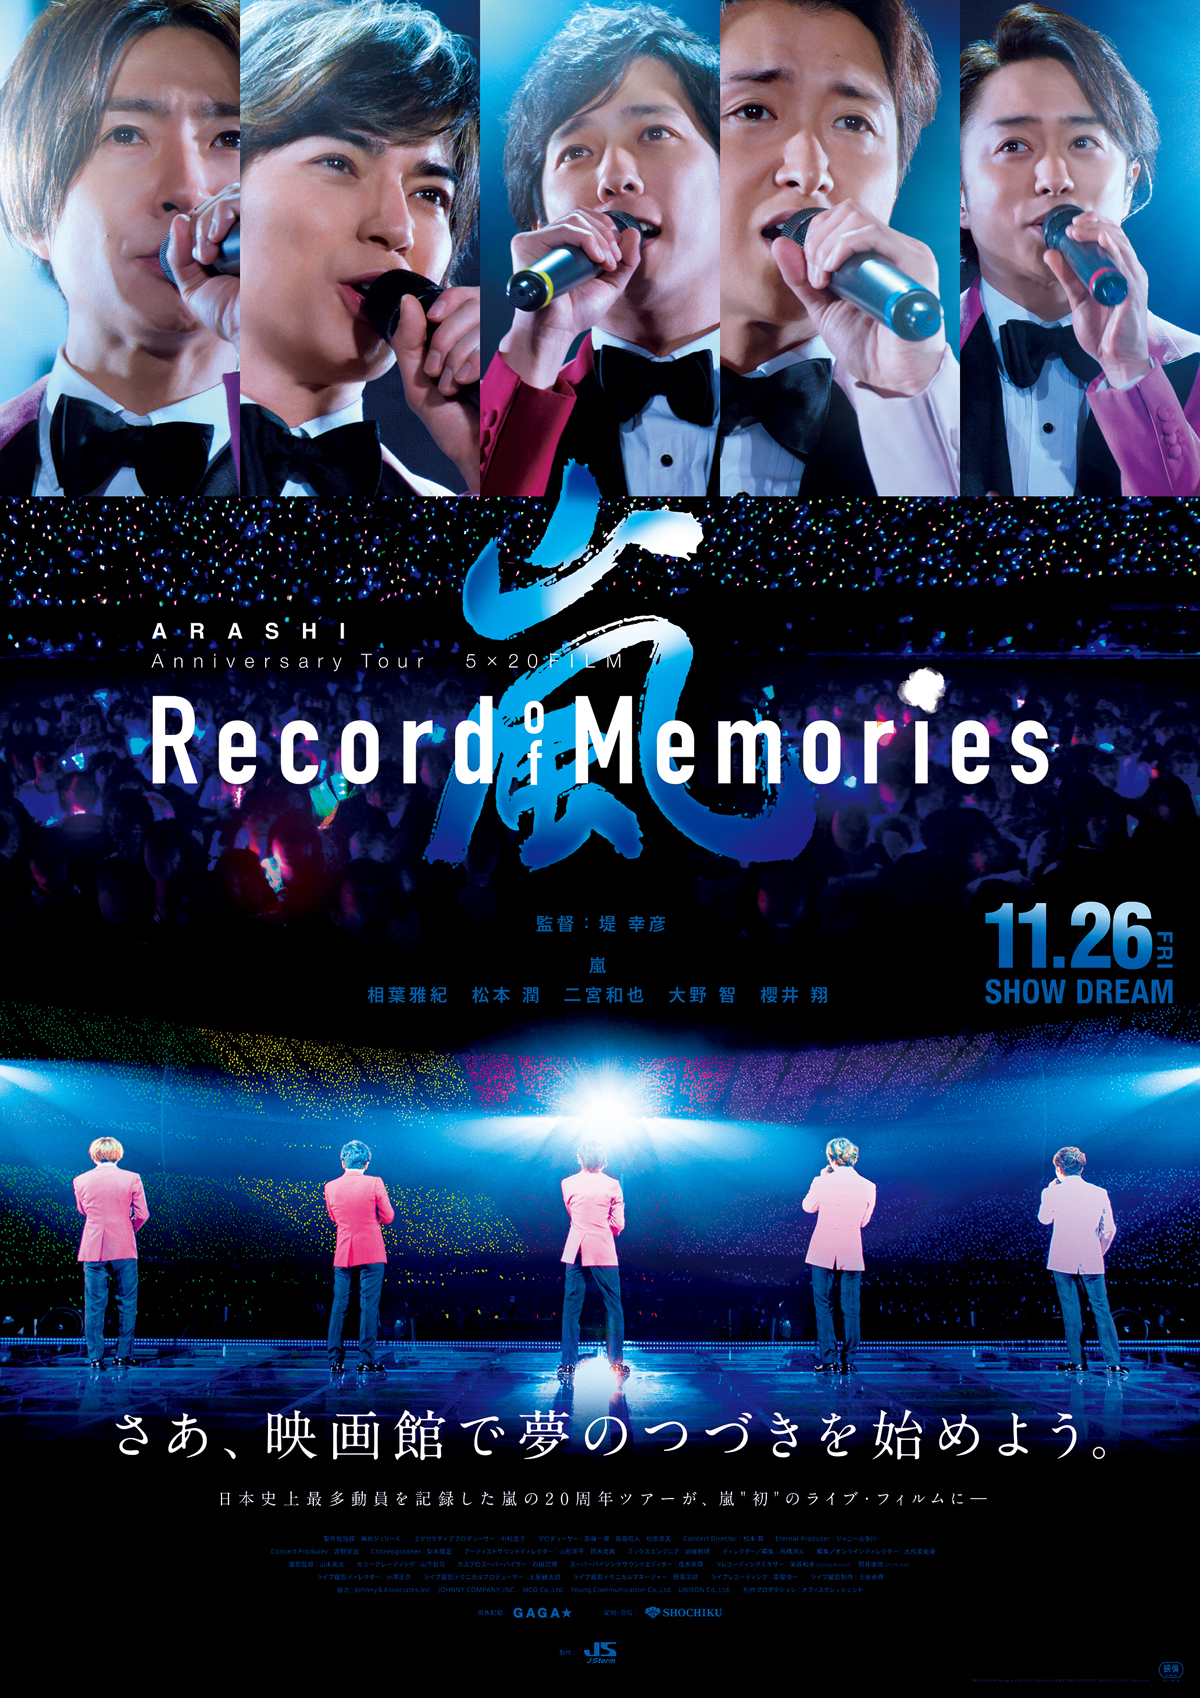 ARASHI Anniversary Tour 5×20 FILM Record of Memoriesの画像